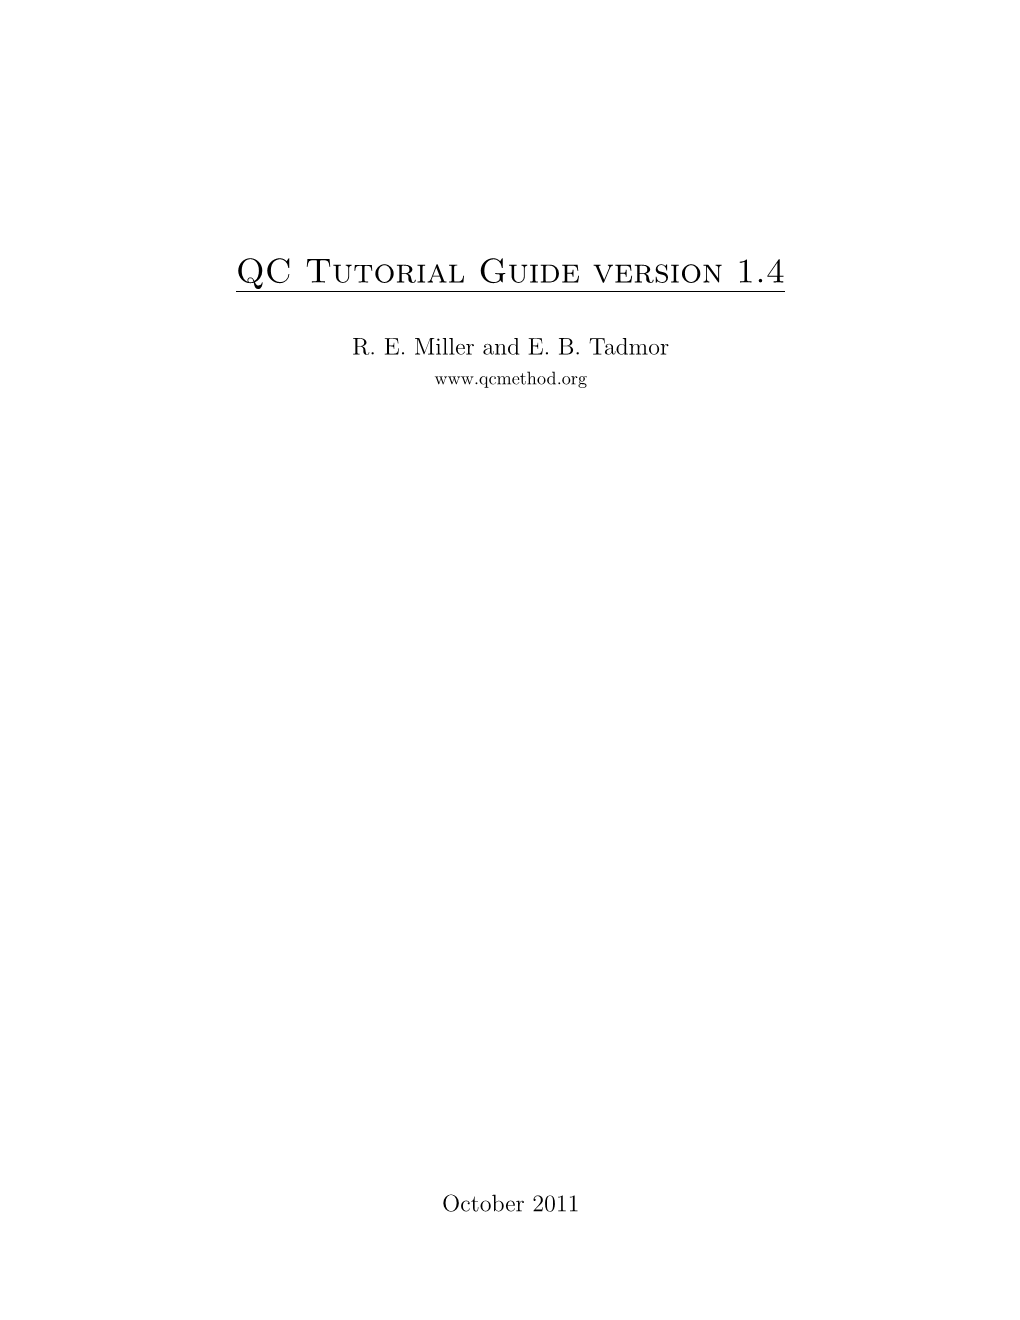 QC Tutorial Guide Version 1.4 (October 2011)